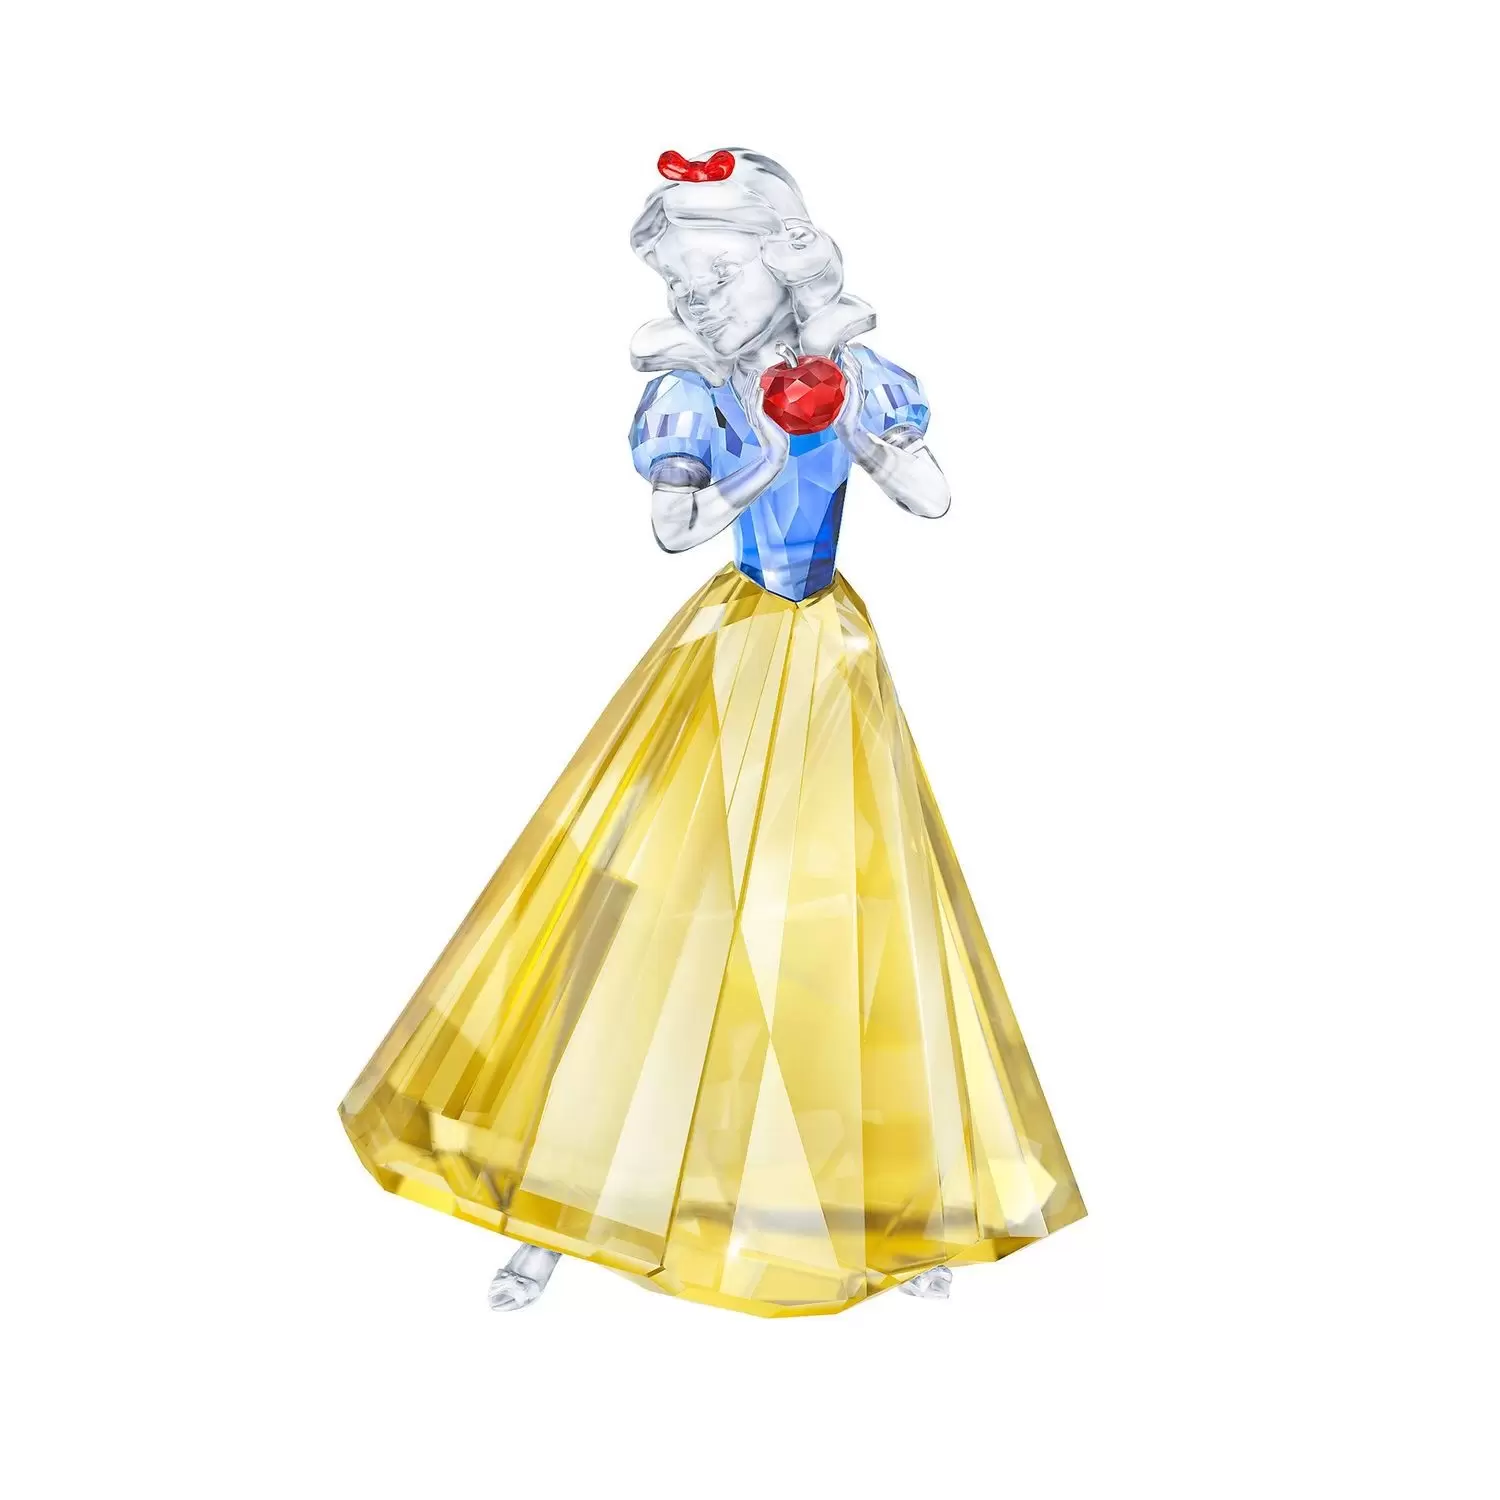 Swarovski Crystal Figures - Snow White Limited Edition 2019